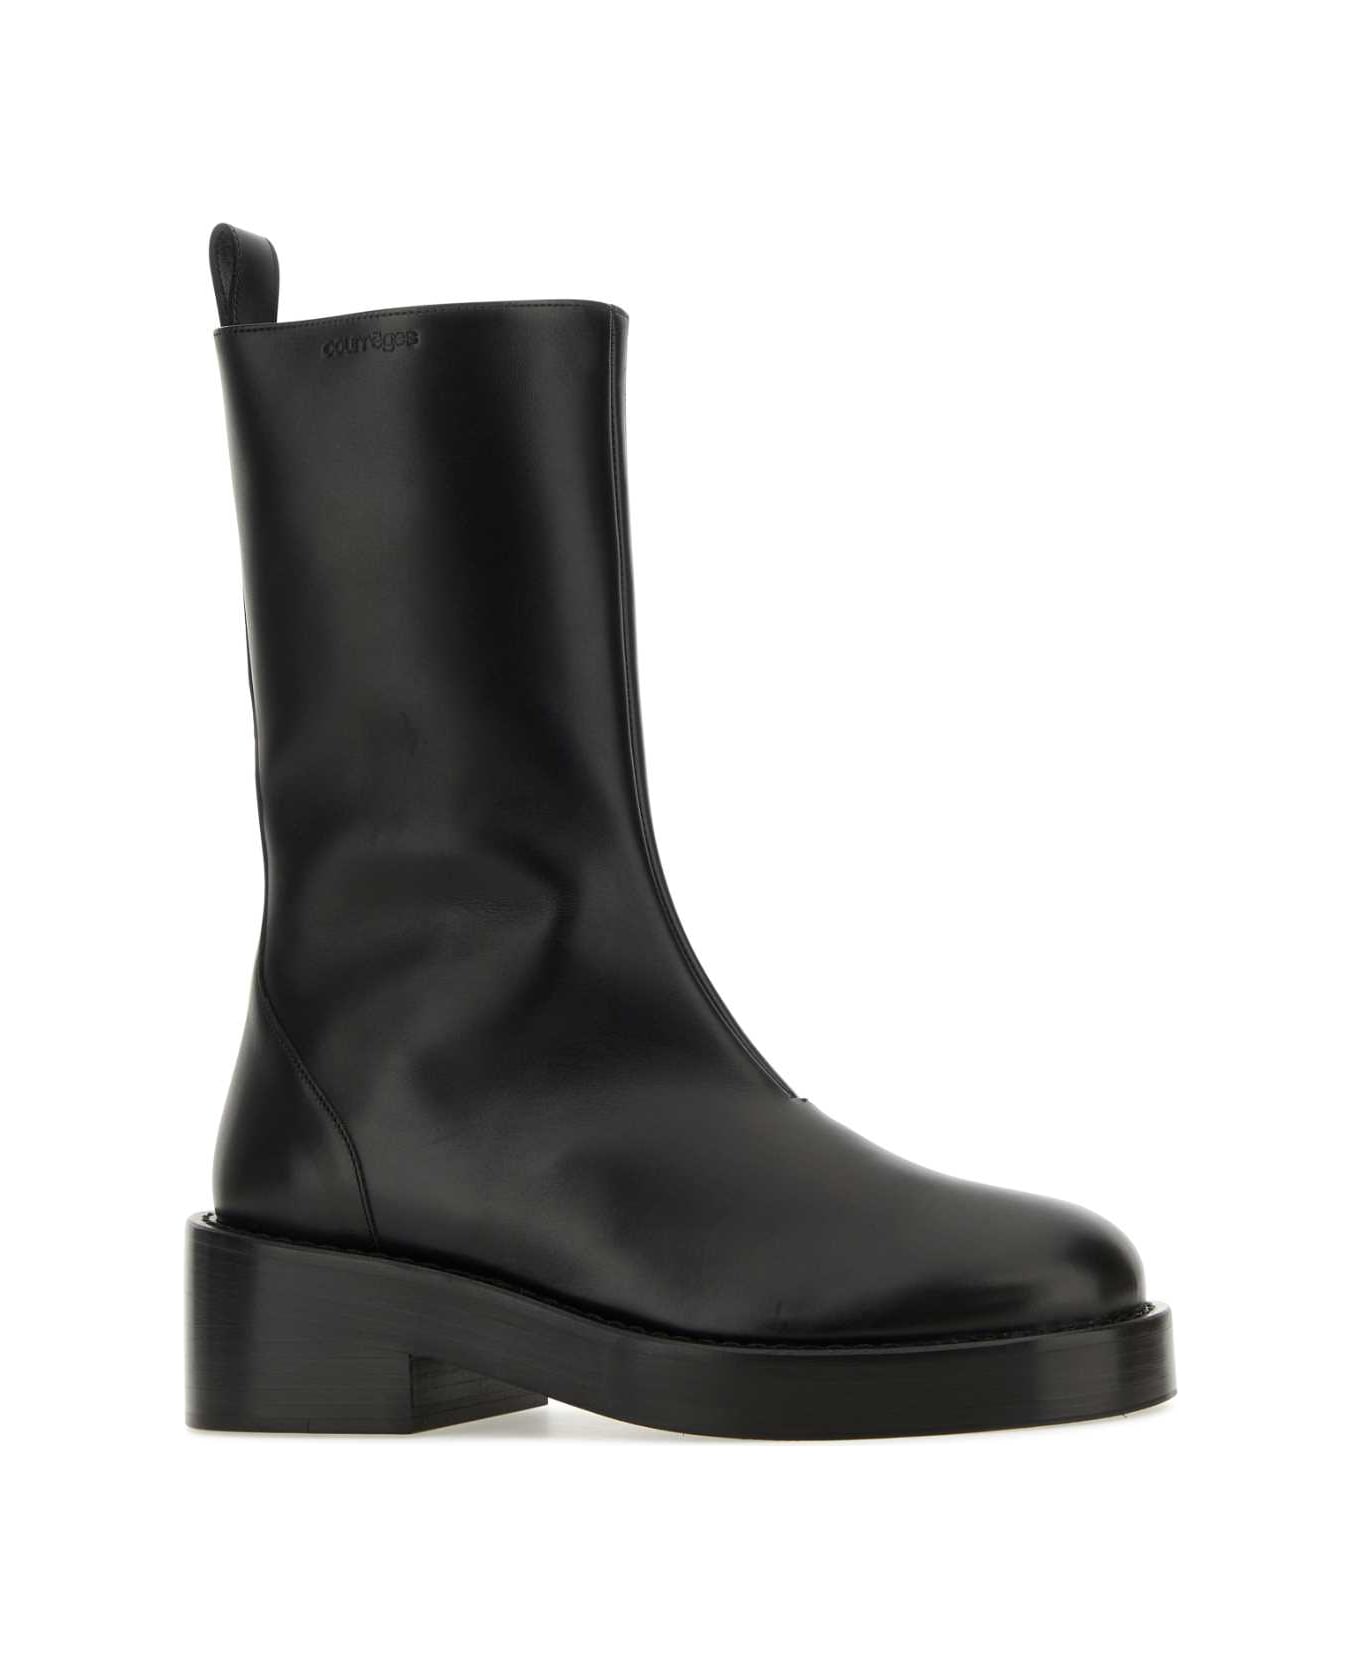 Courrèges Black Leather Ankle Boots - Black ブーツ